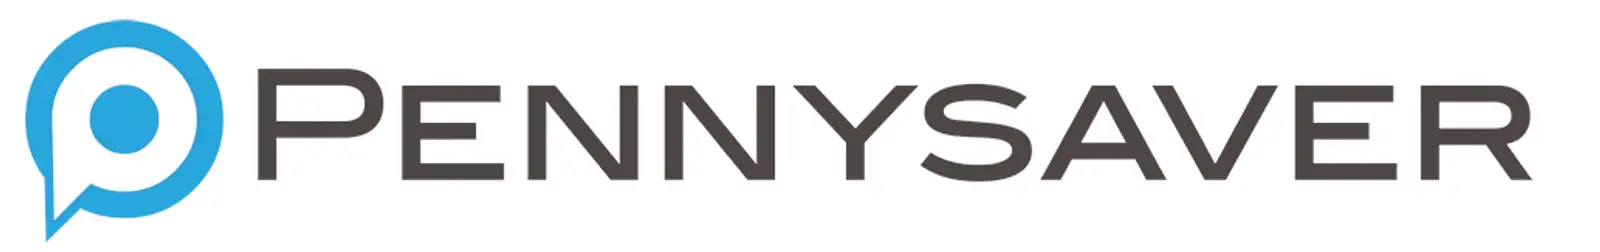 Pennysaver logo